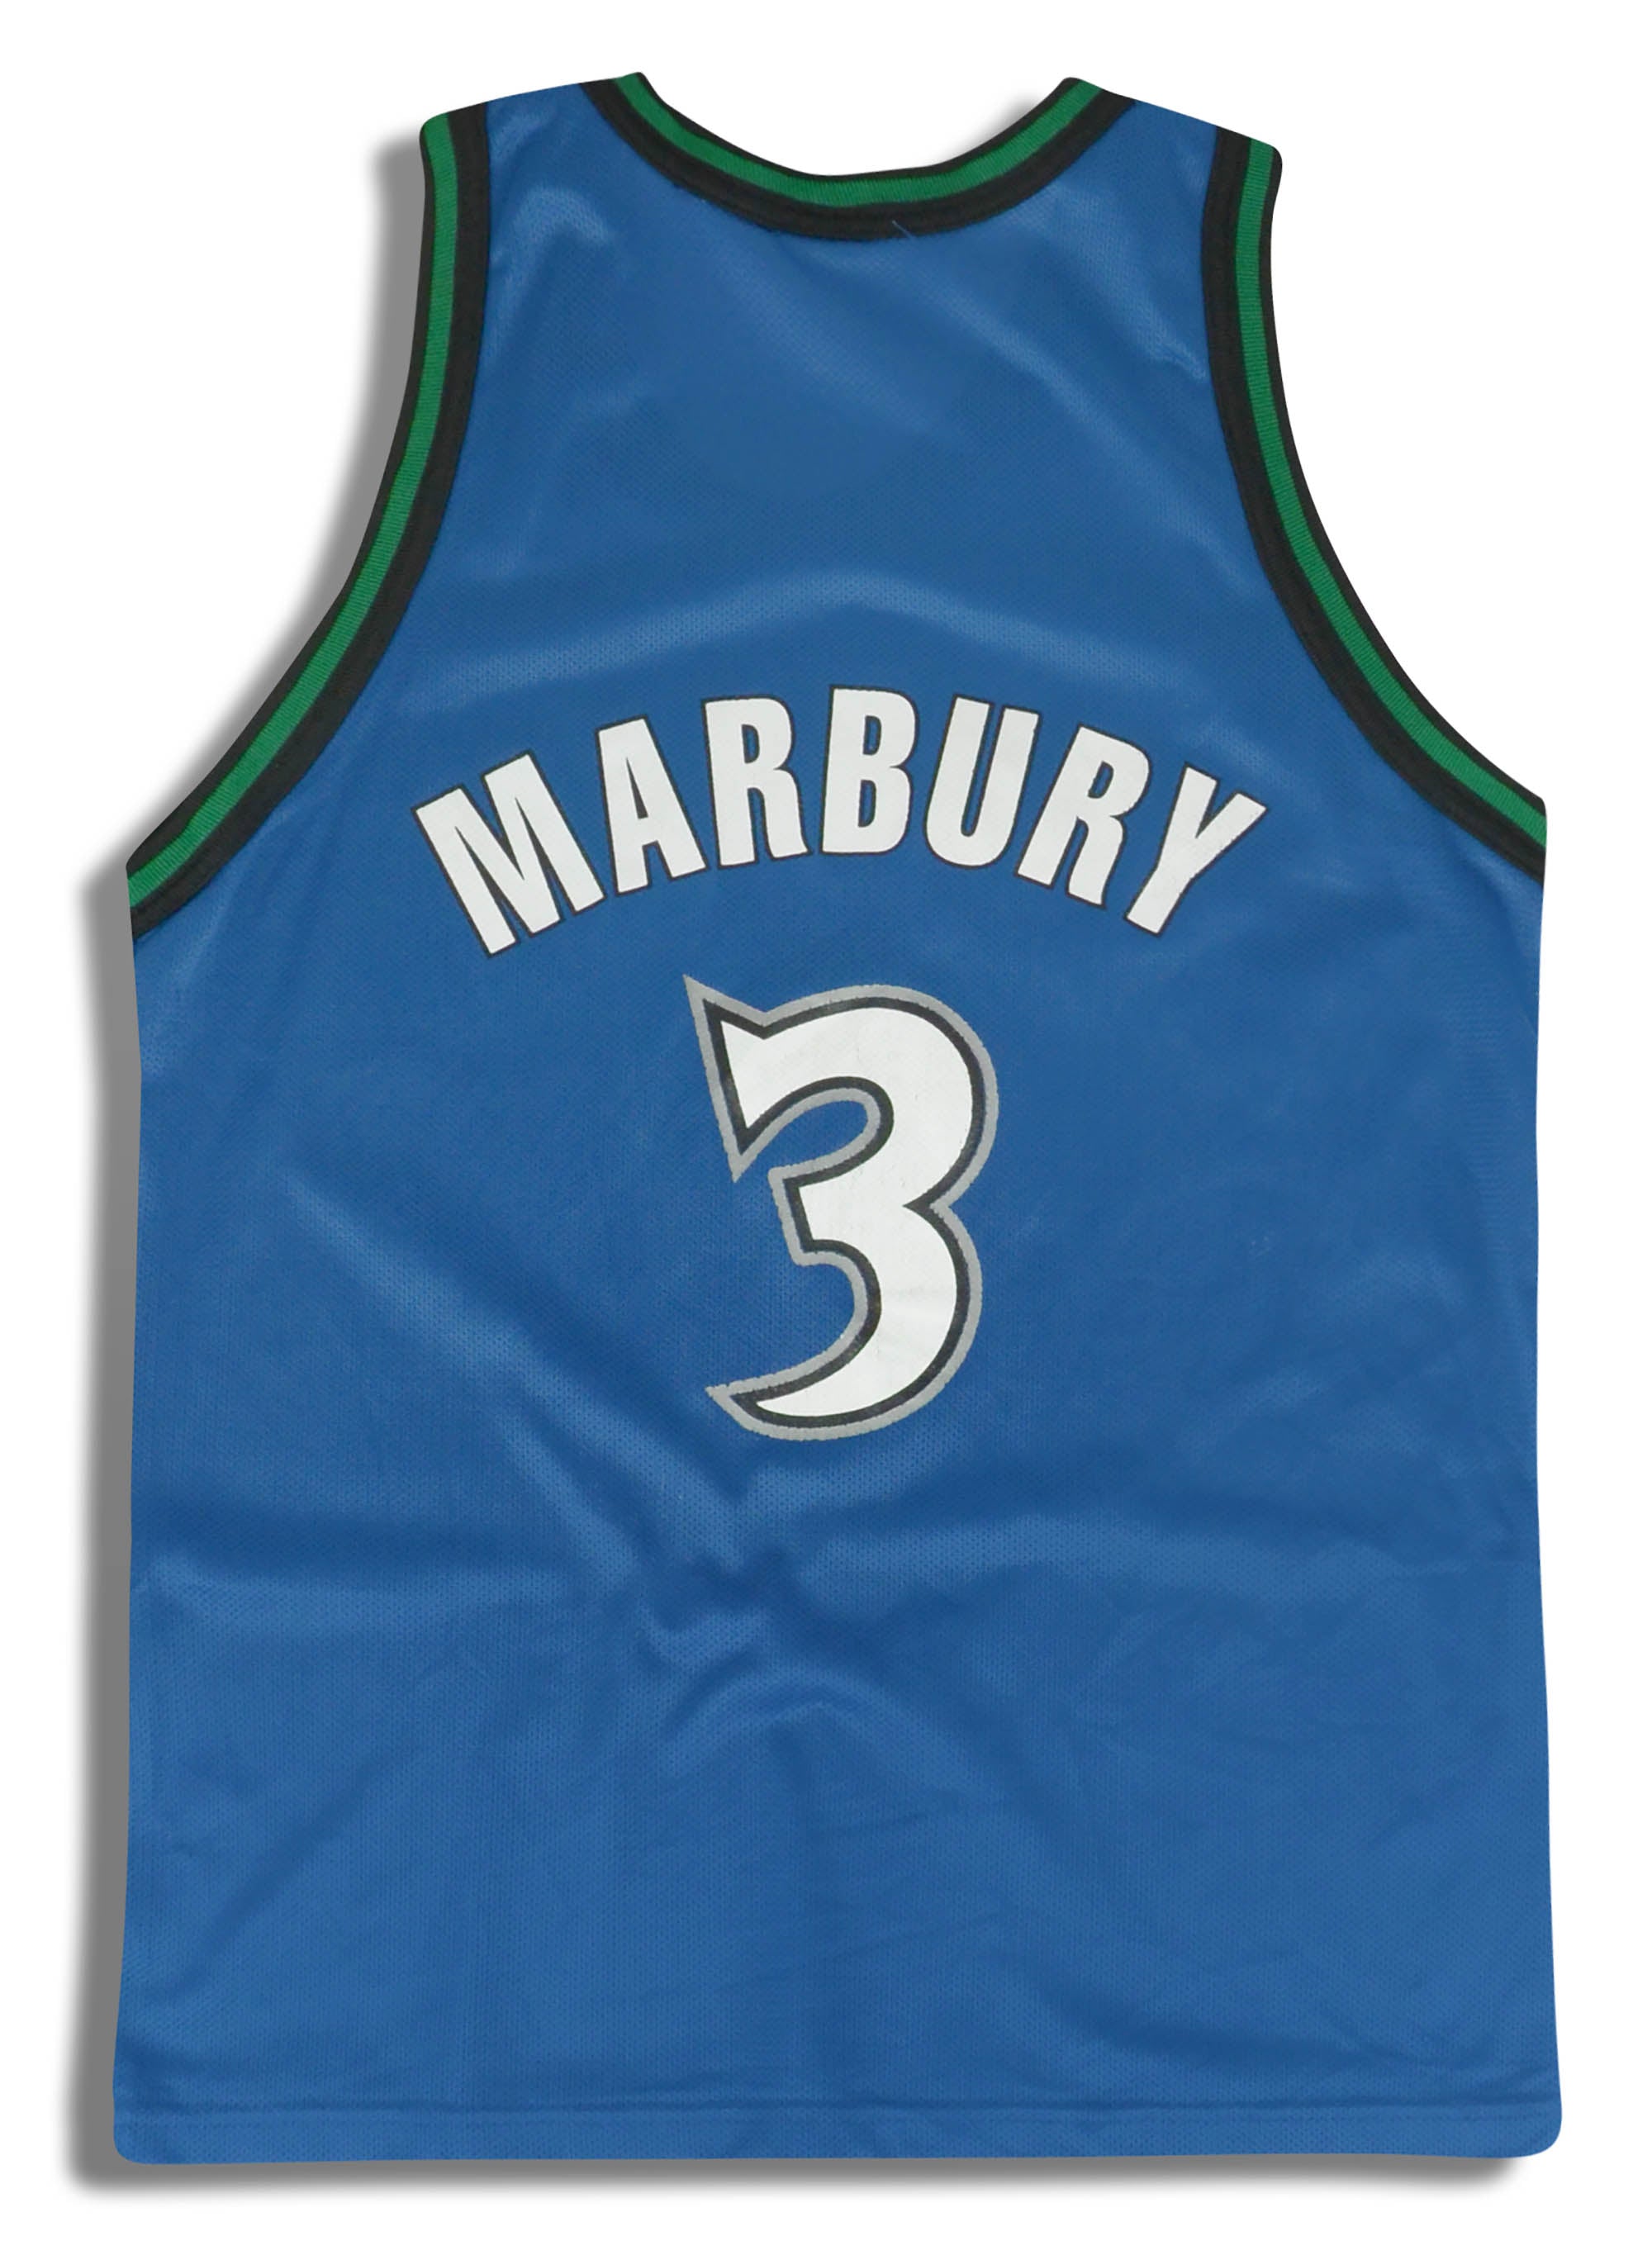 1996-99 MINNESOTA TIMBERWOLVES MARBURY #3 CHAMPION JERSEY (AWAY) S